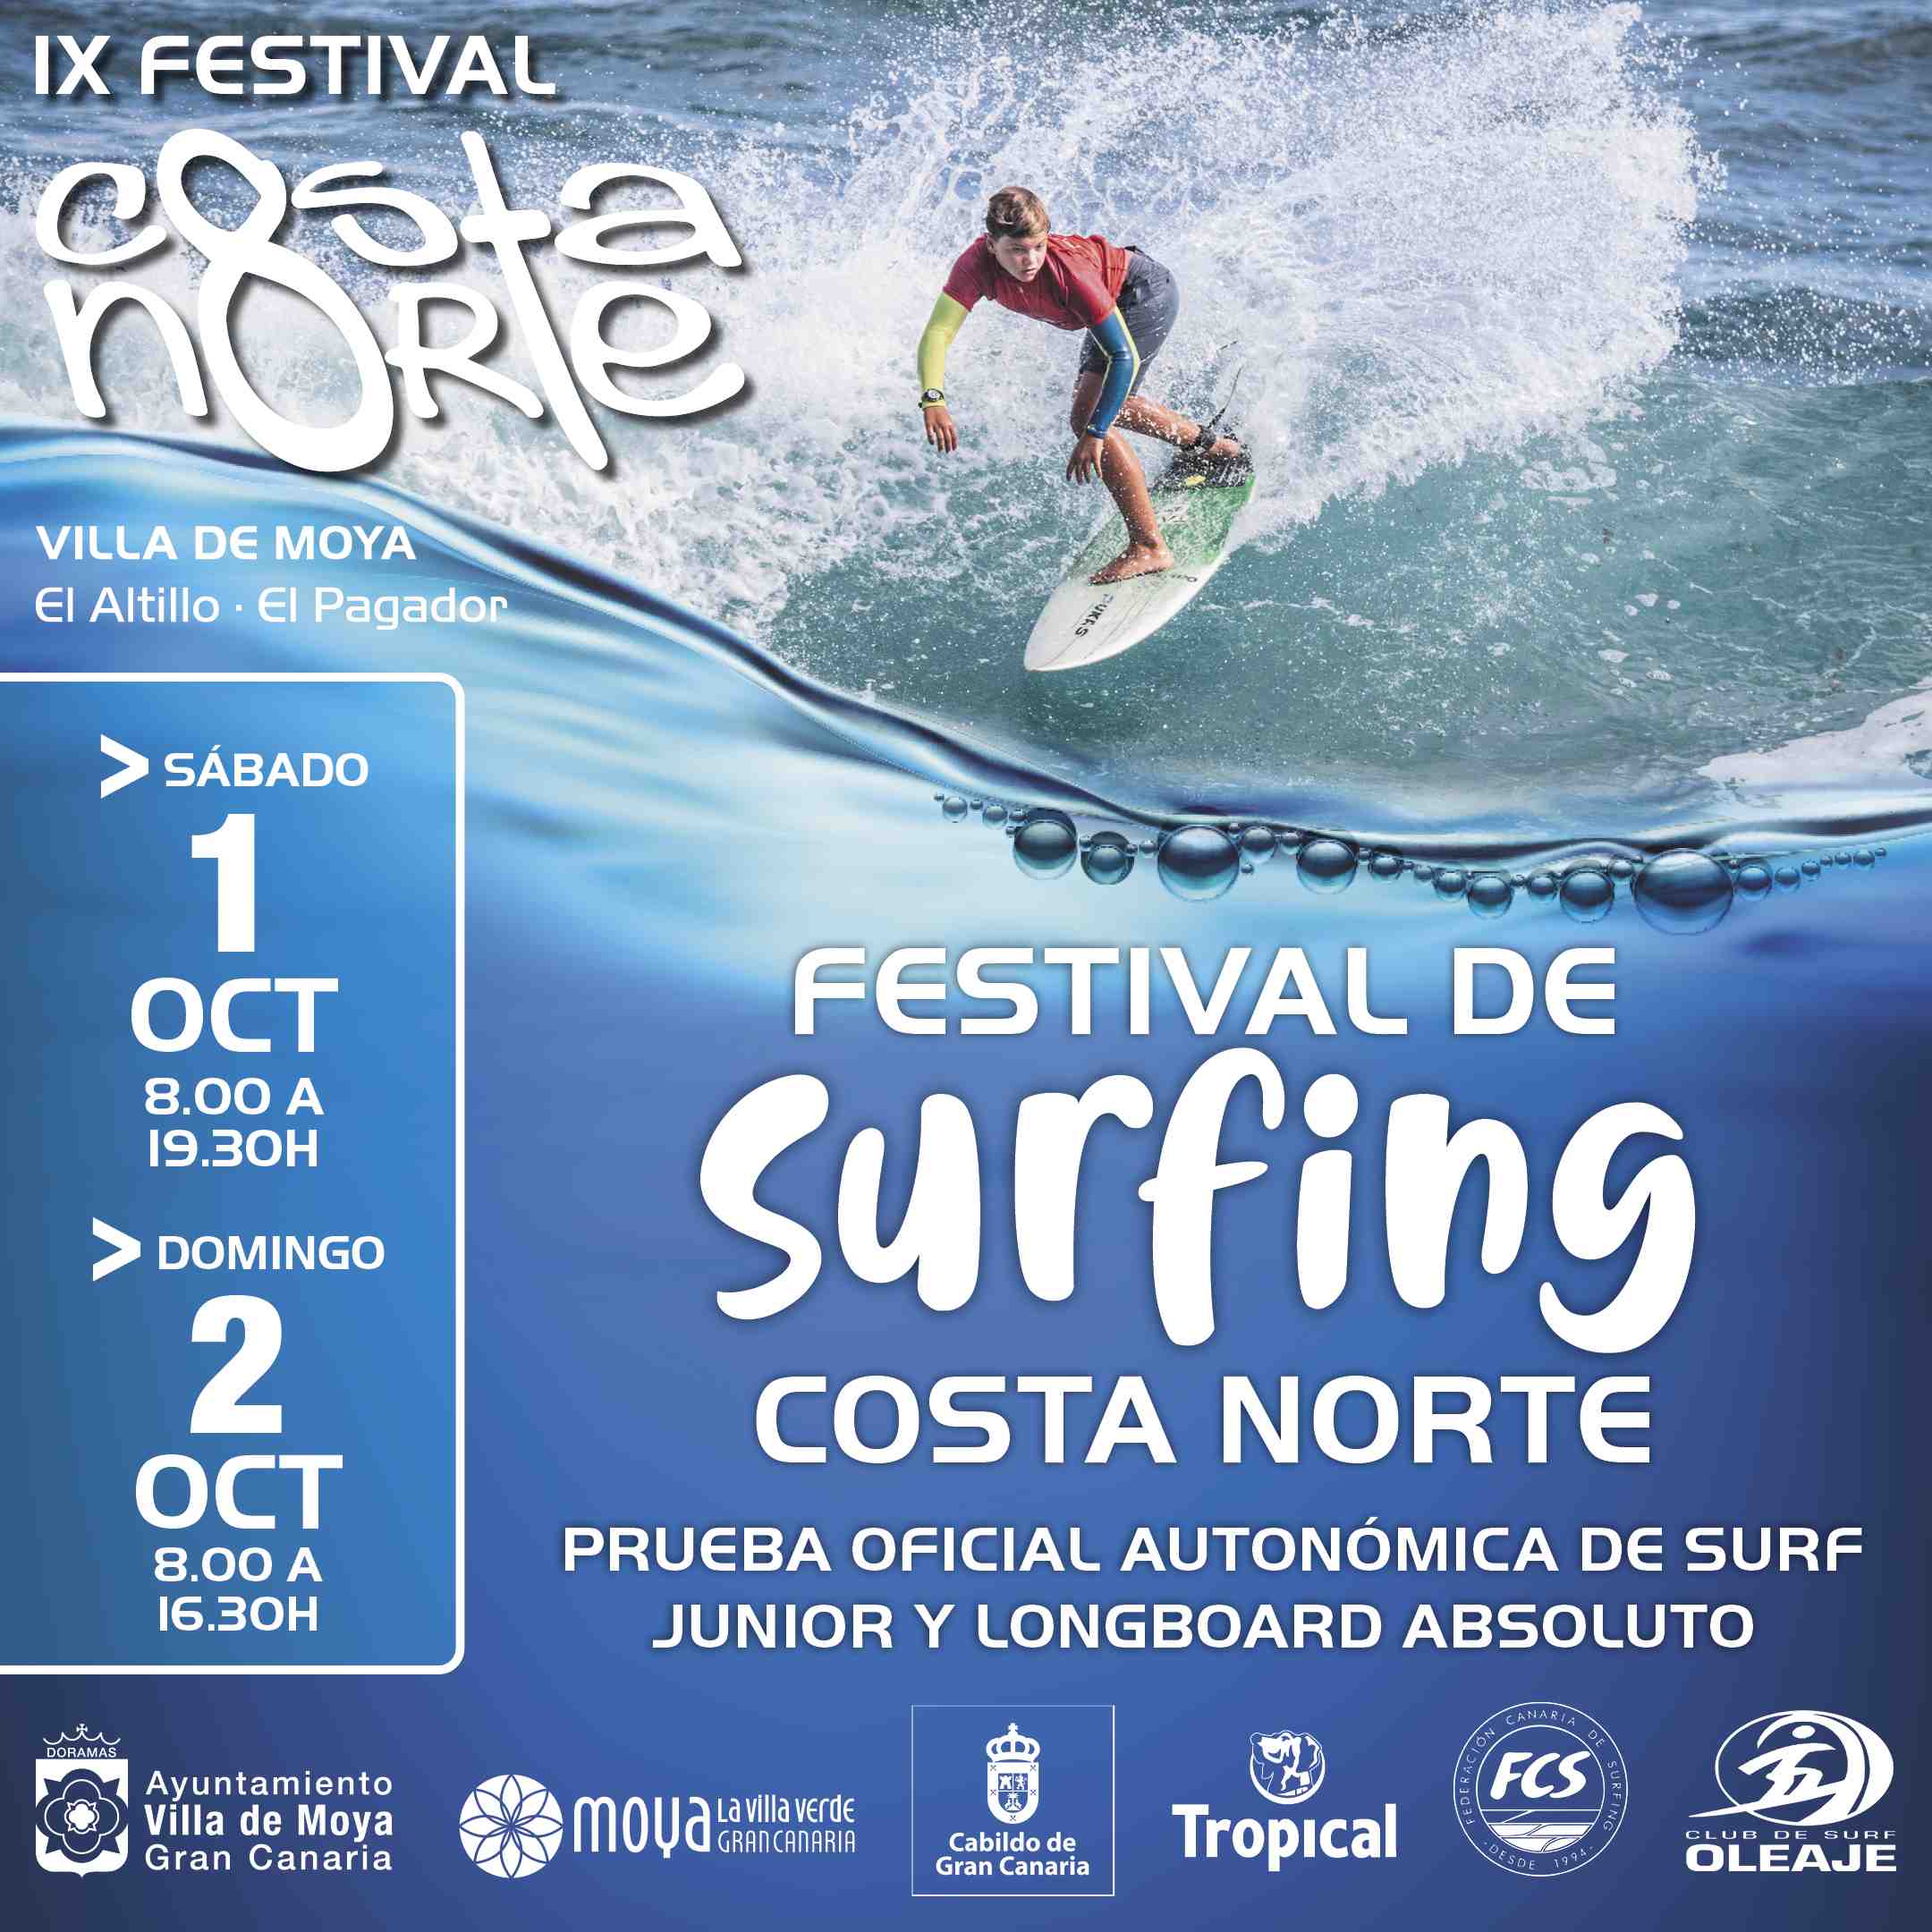 FESTIVAL DE SURFING COSTA NORTE 2022 - Inscriu-te